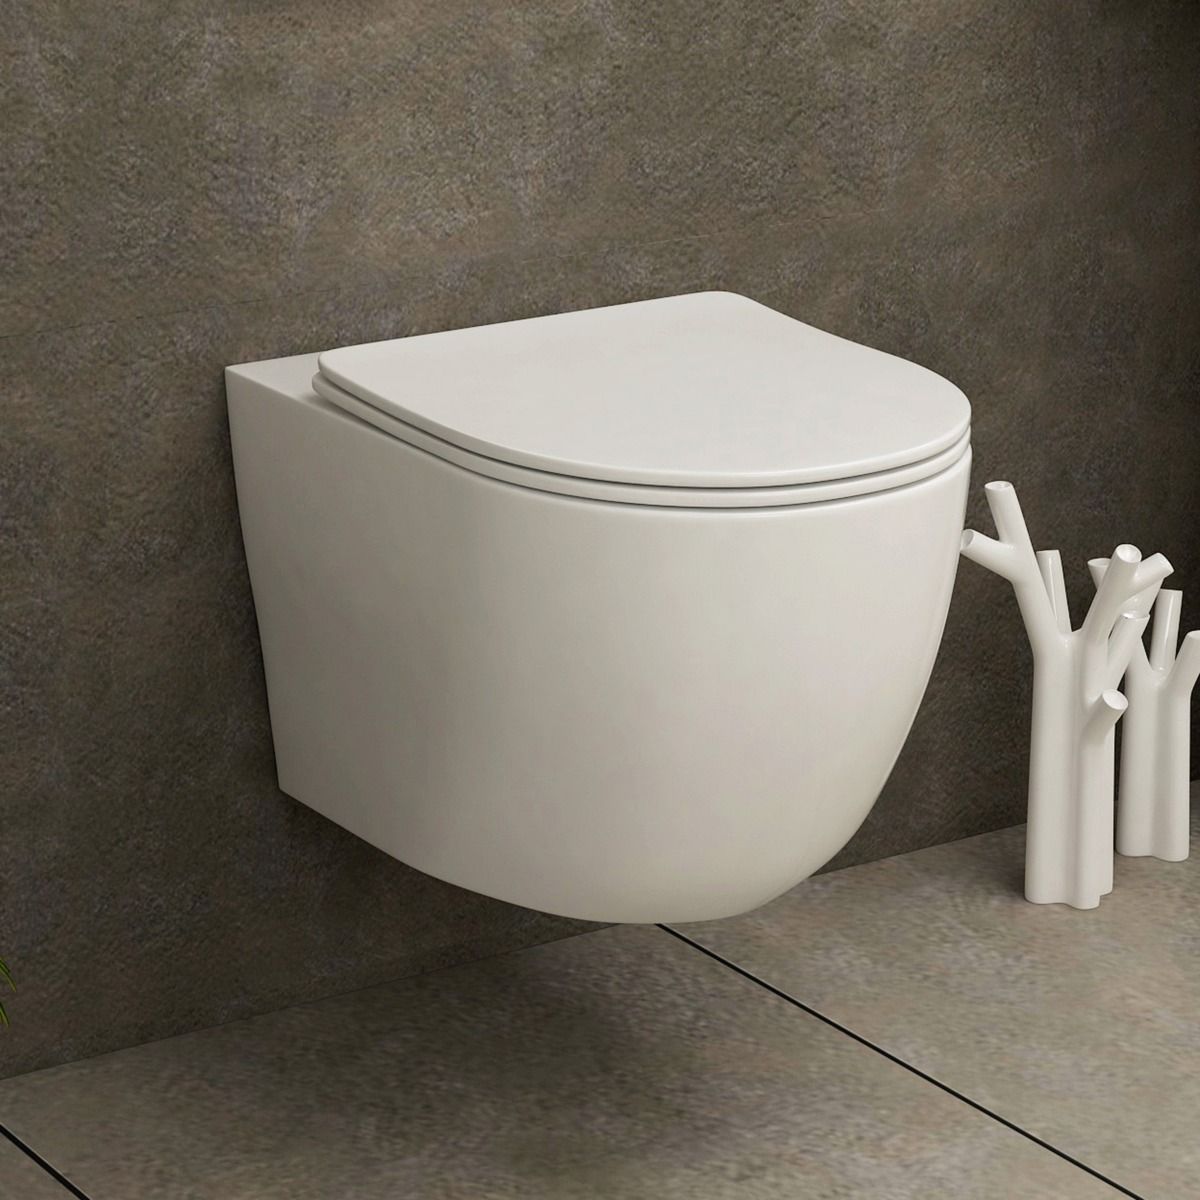 BTW pan Toilet - Royal Bathrooms